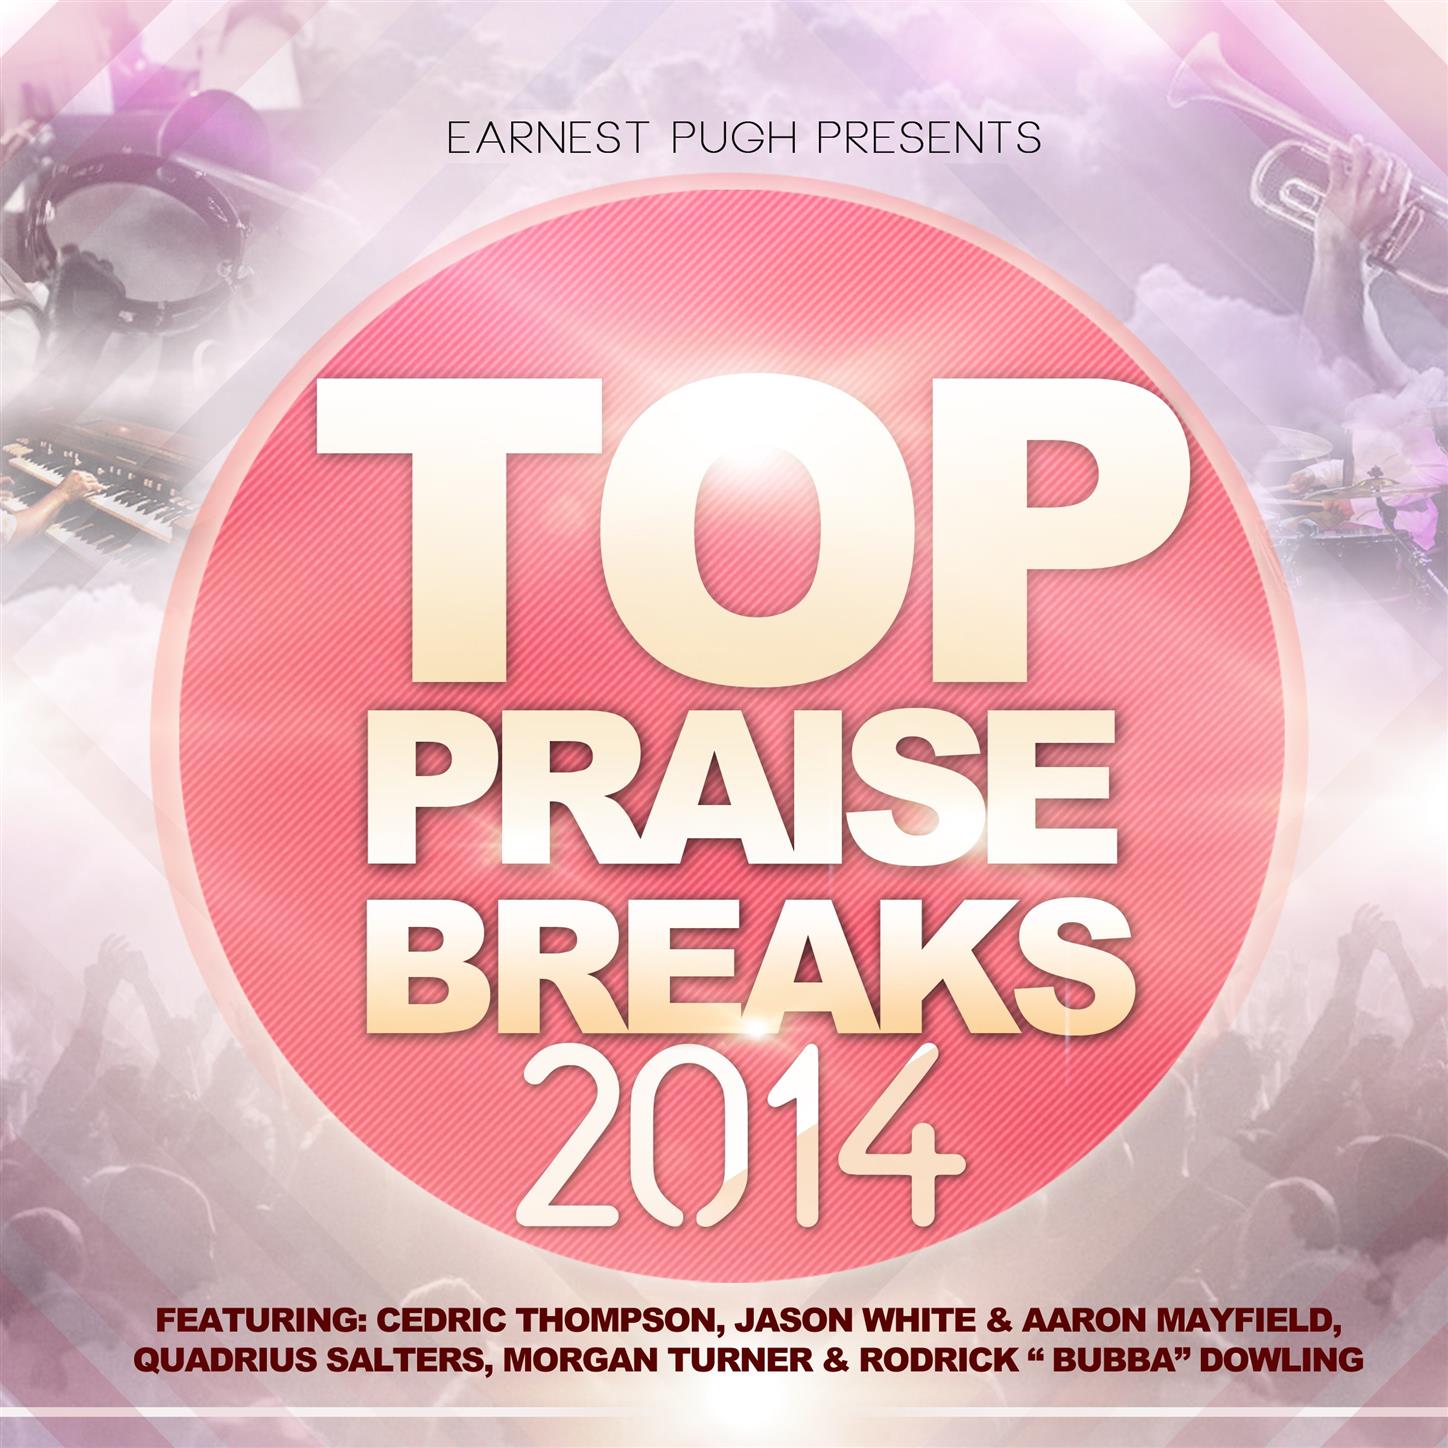 Earnest Pugh Presents : Top Praise Breaks 2014